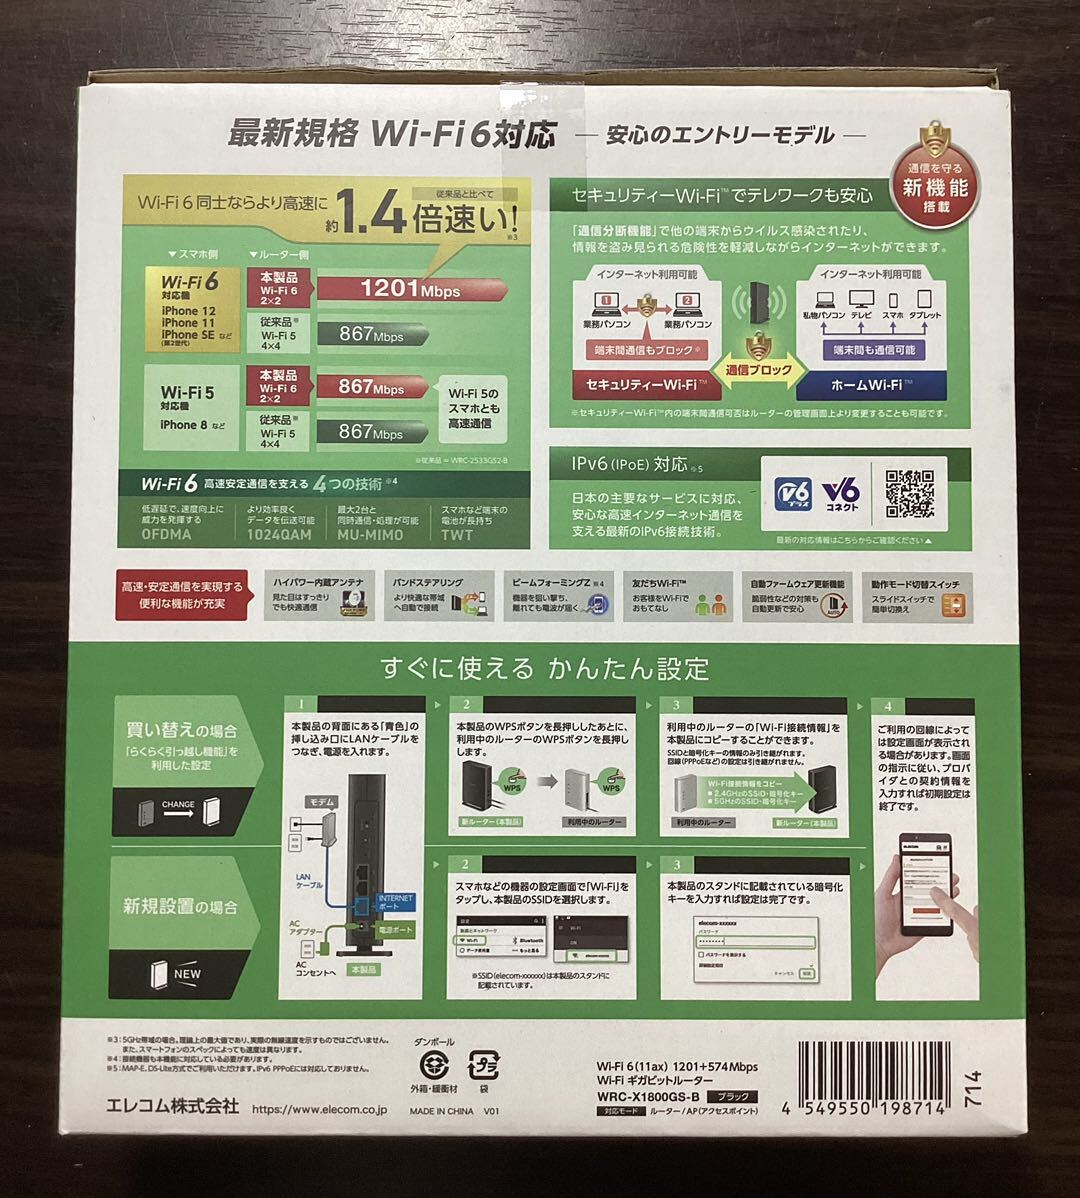 Wi-Fi 6(11ax) 1201+574Mbps Wi-Fi ギガビットルーターWRC-X1800GS-B/ 中古/動作済みの画像3